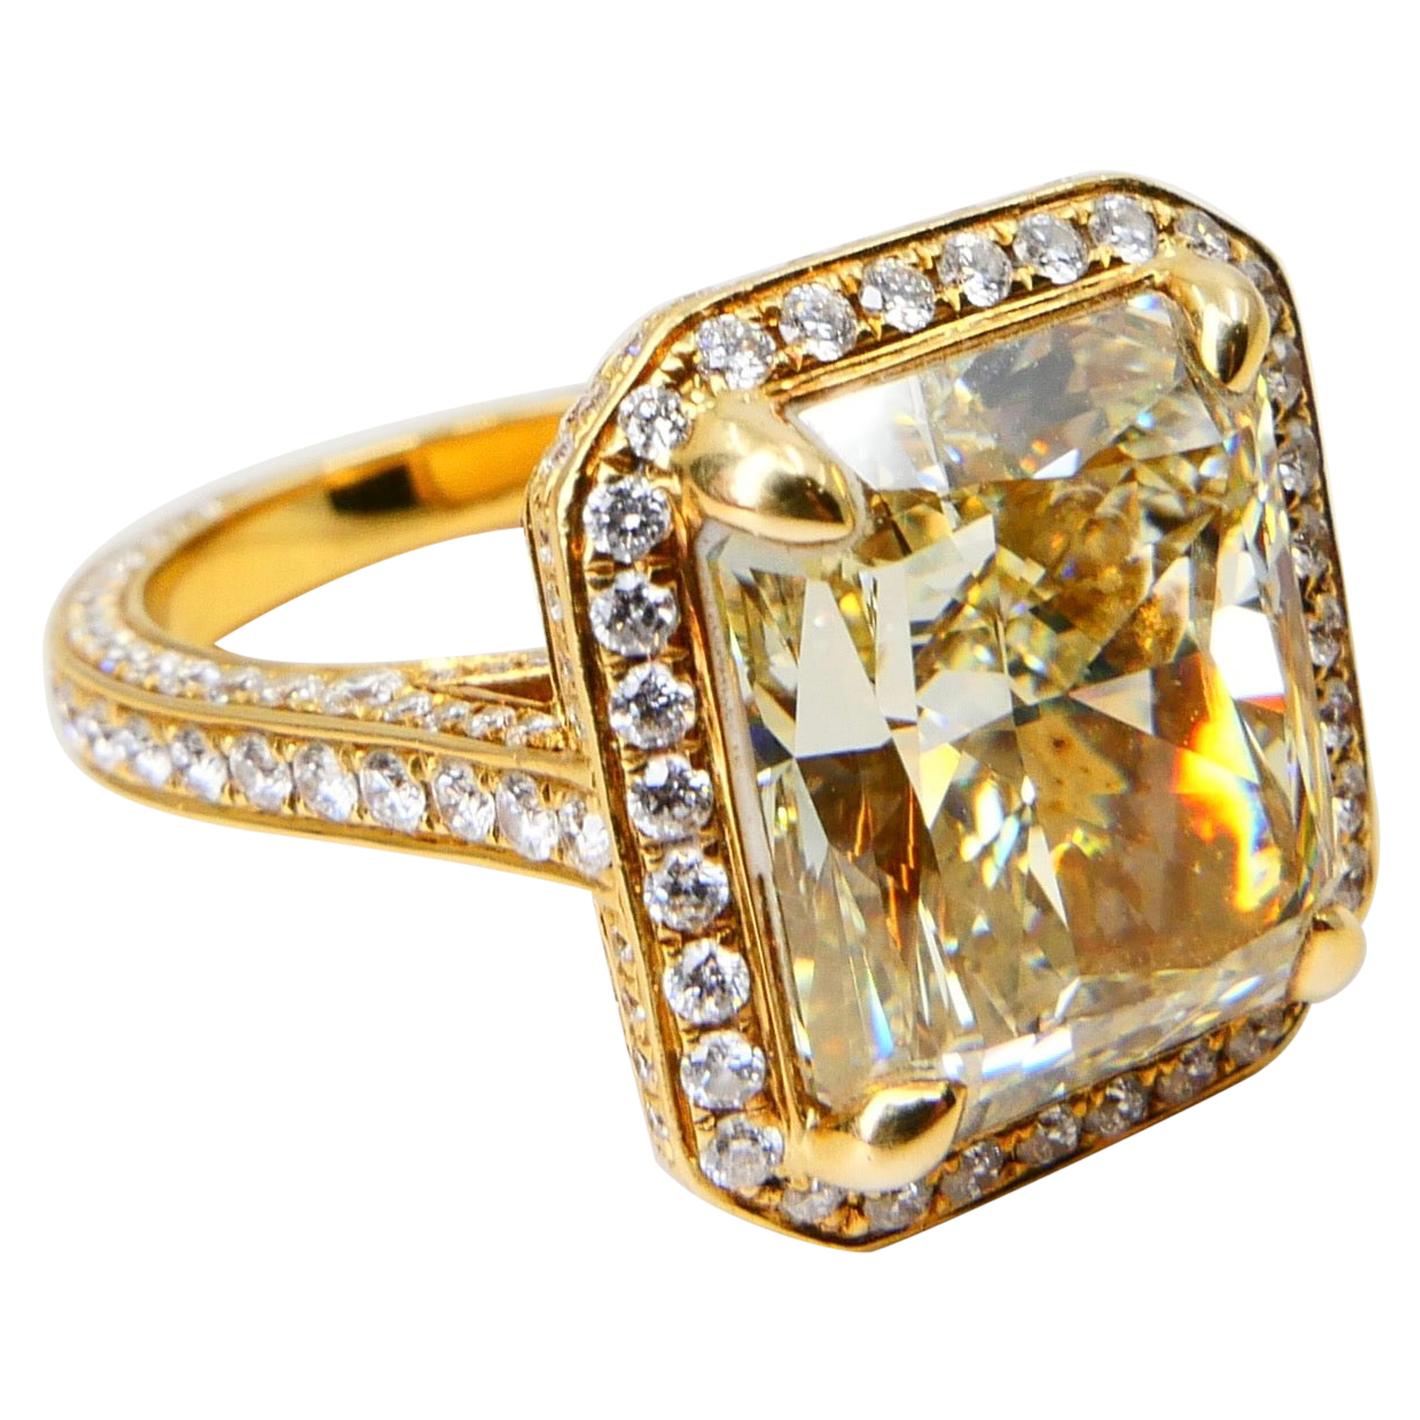 GIA Certified 9 Carat Yellow Diamond Engagement Ring, Oversized & Eye Clean